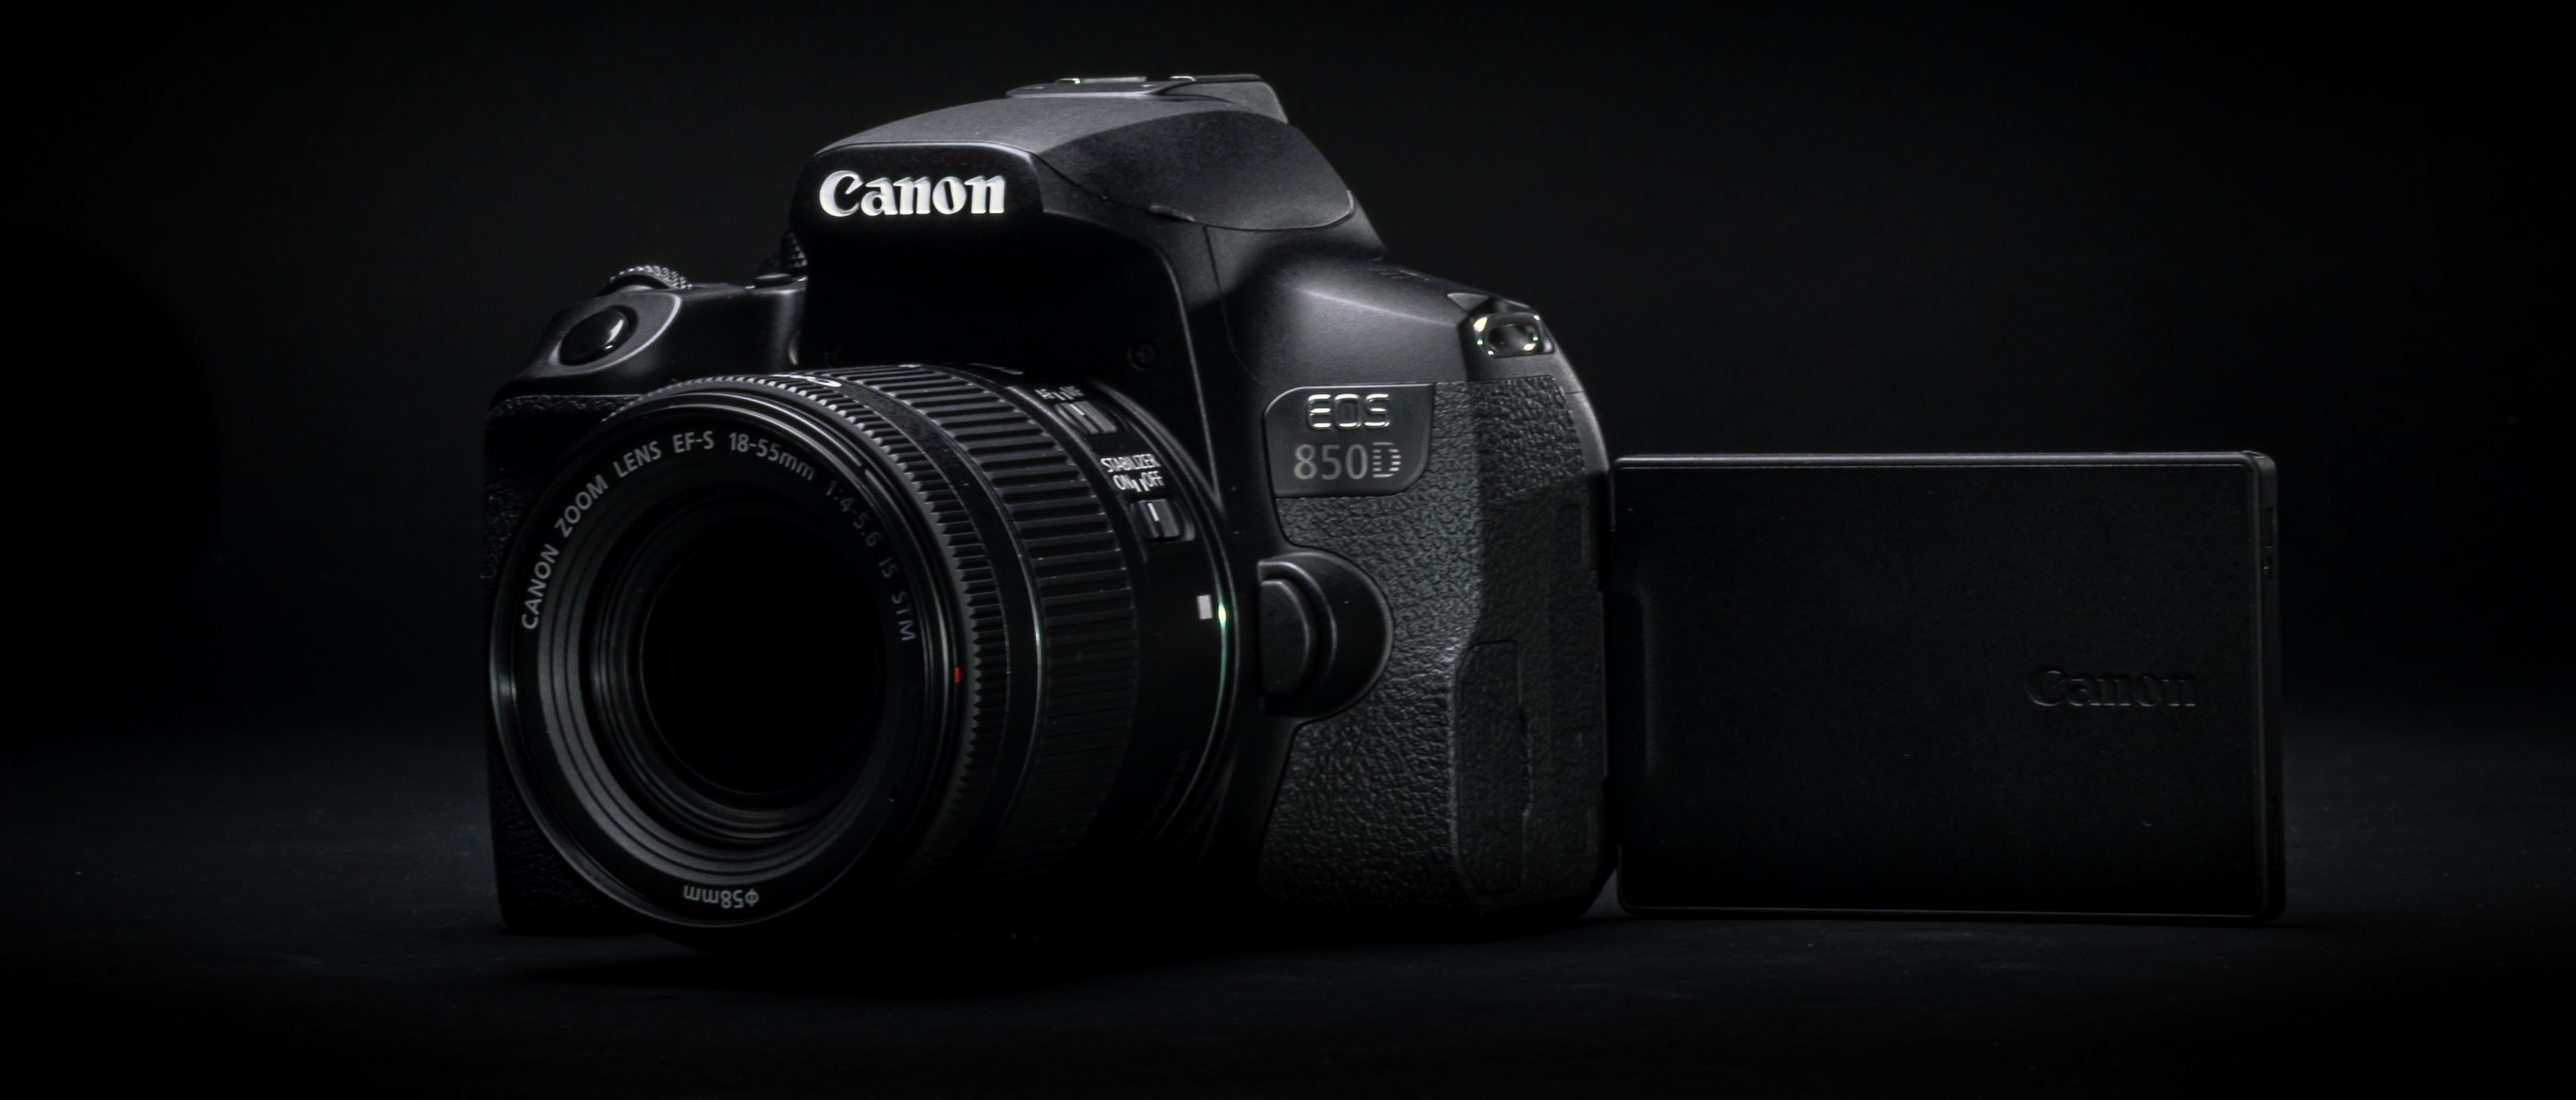 Preview Image: Das ist die neue Canon EOS 850D